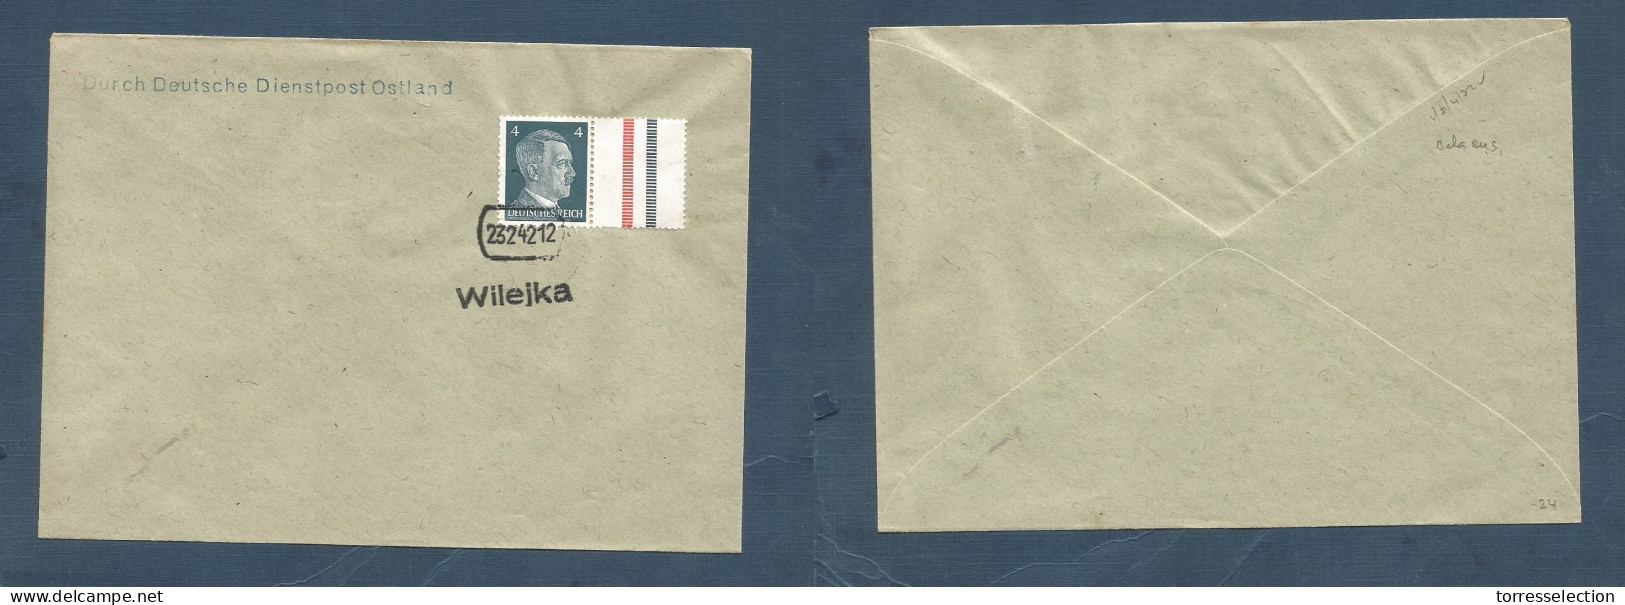 BIELORUSIA. 1942 (23 Febr) Wilejka. Nazi Occup Official Mail Fkd Envelope. Uncirculated + Stlines Cacheted. Fine. XSALE. - Bielorrusia